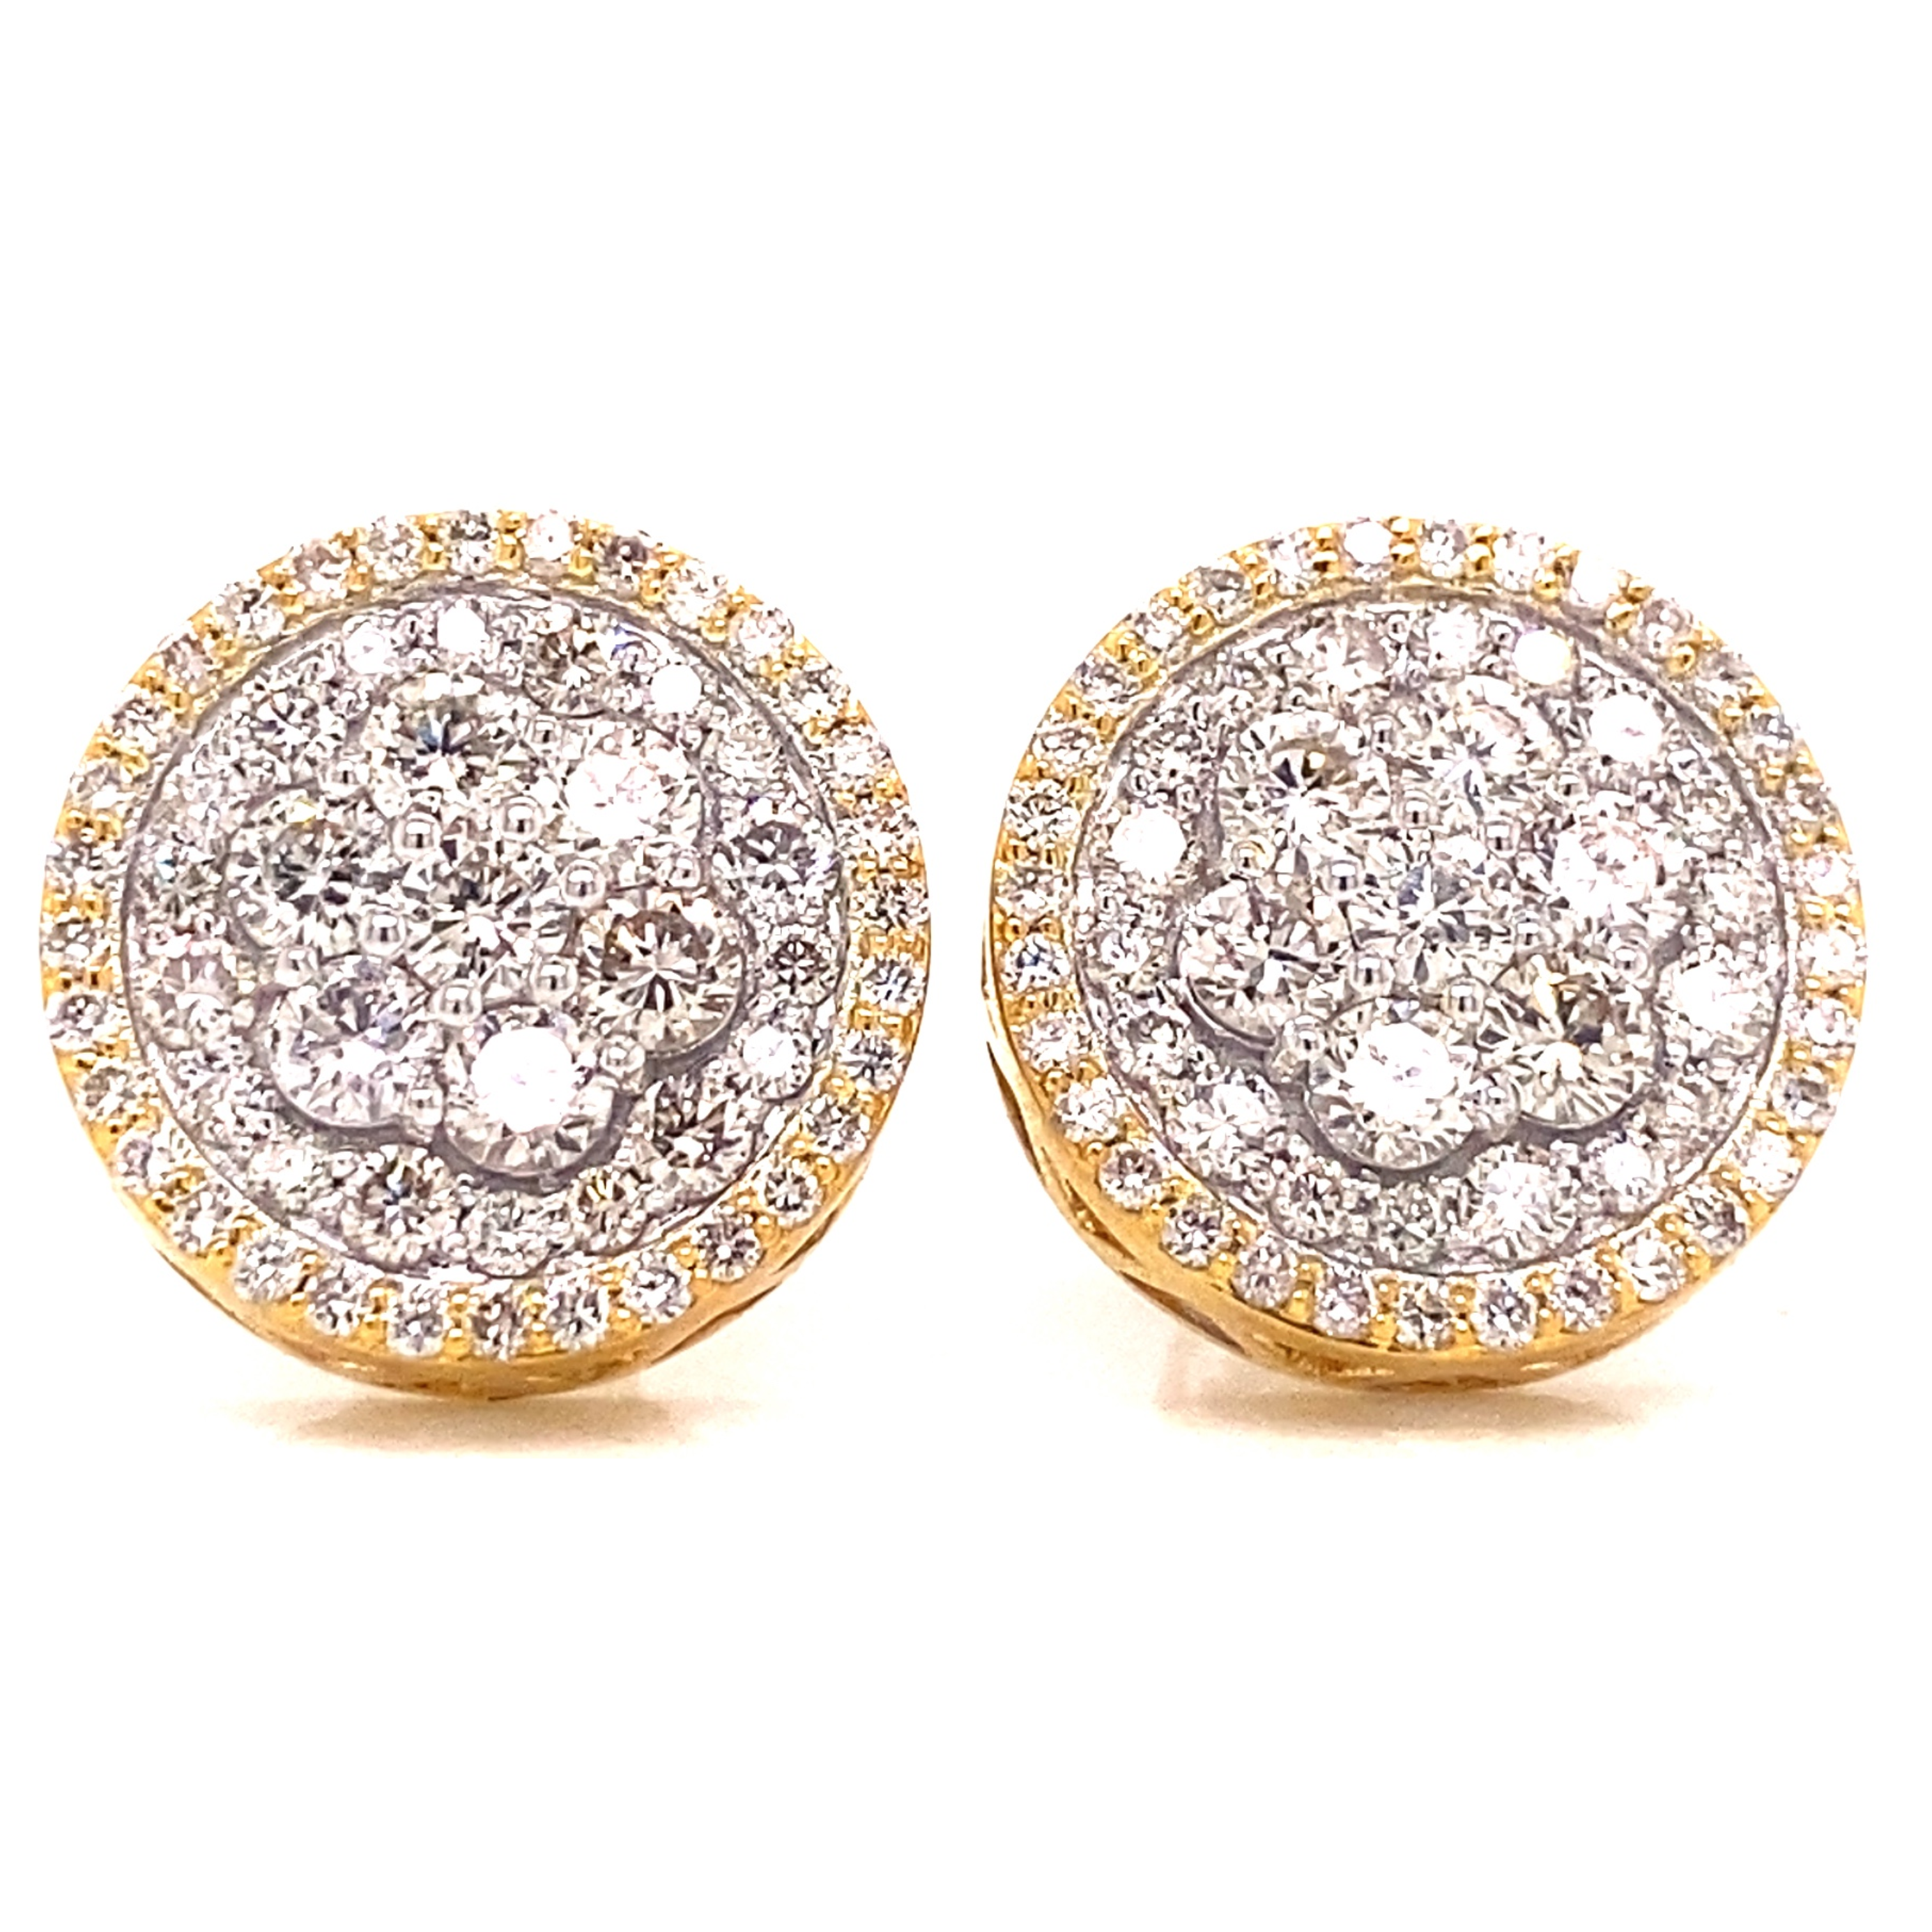 Share more than 268 big diamond stud earrings mens